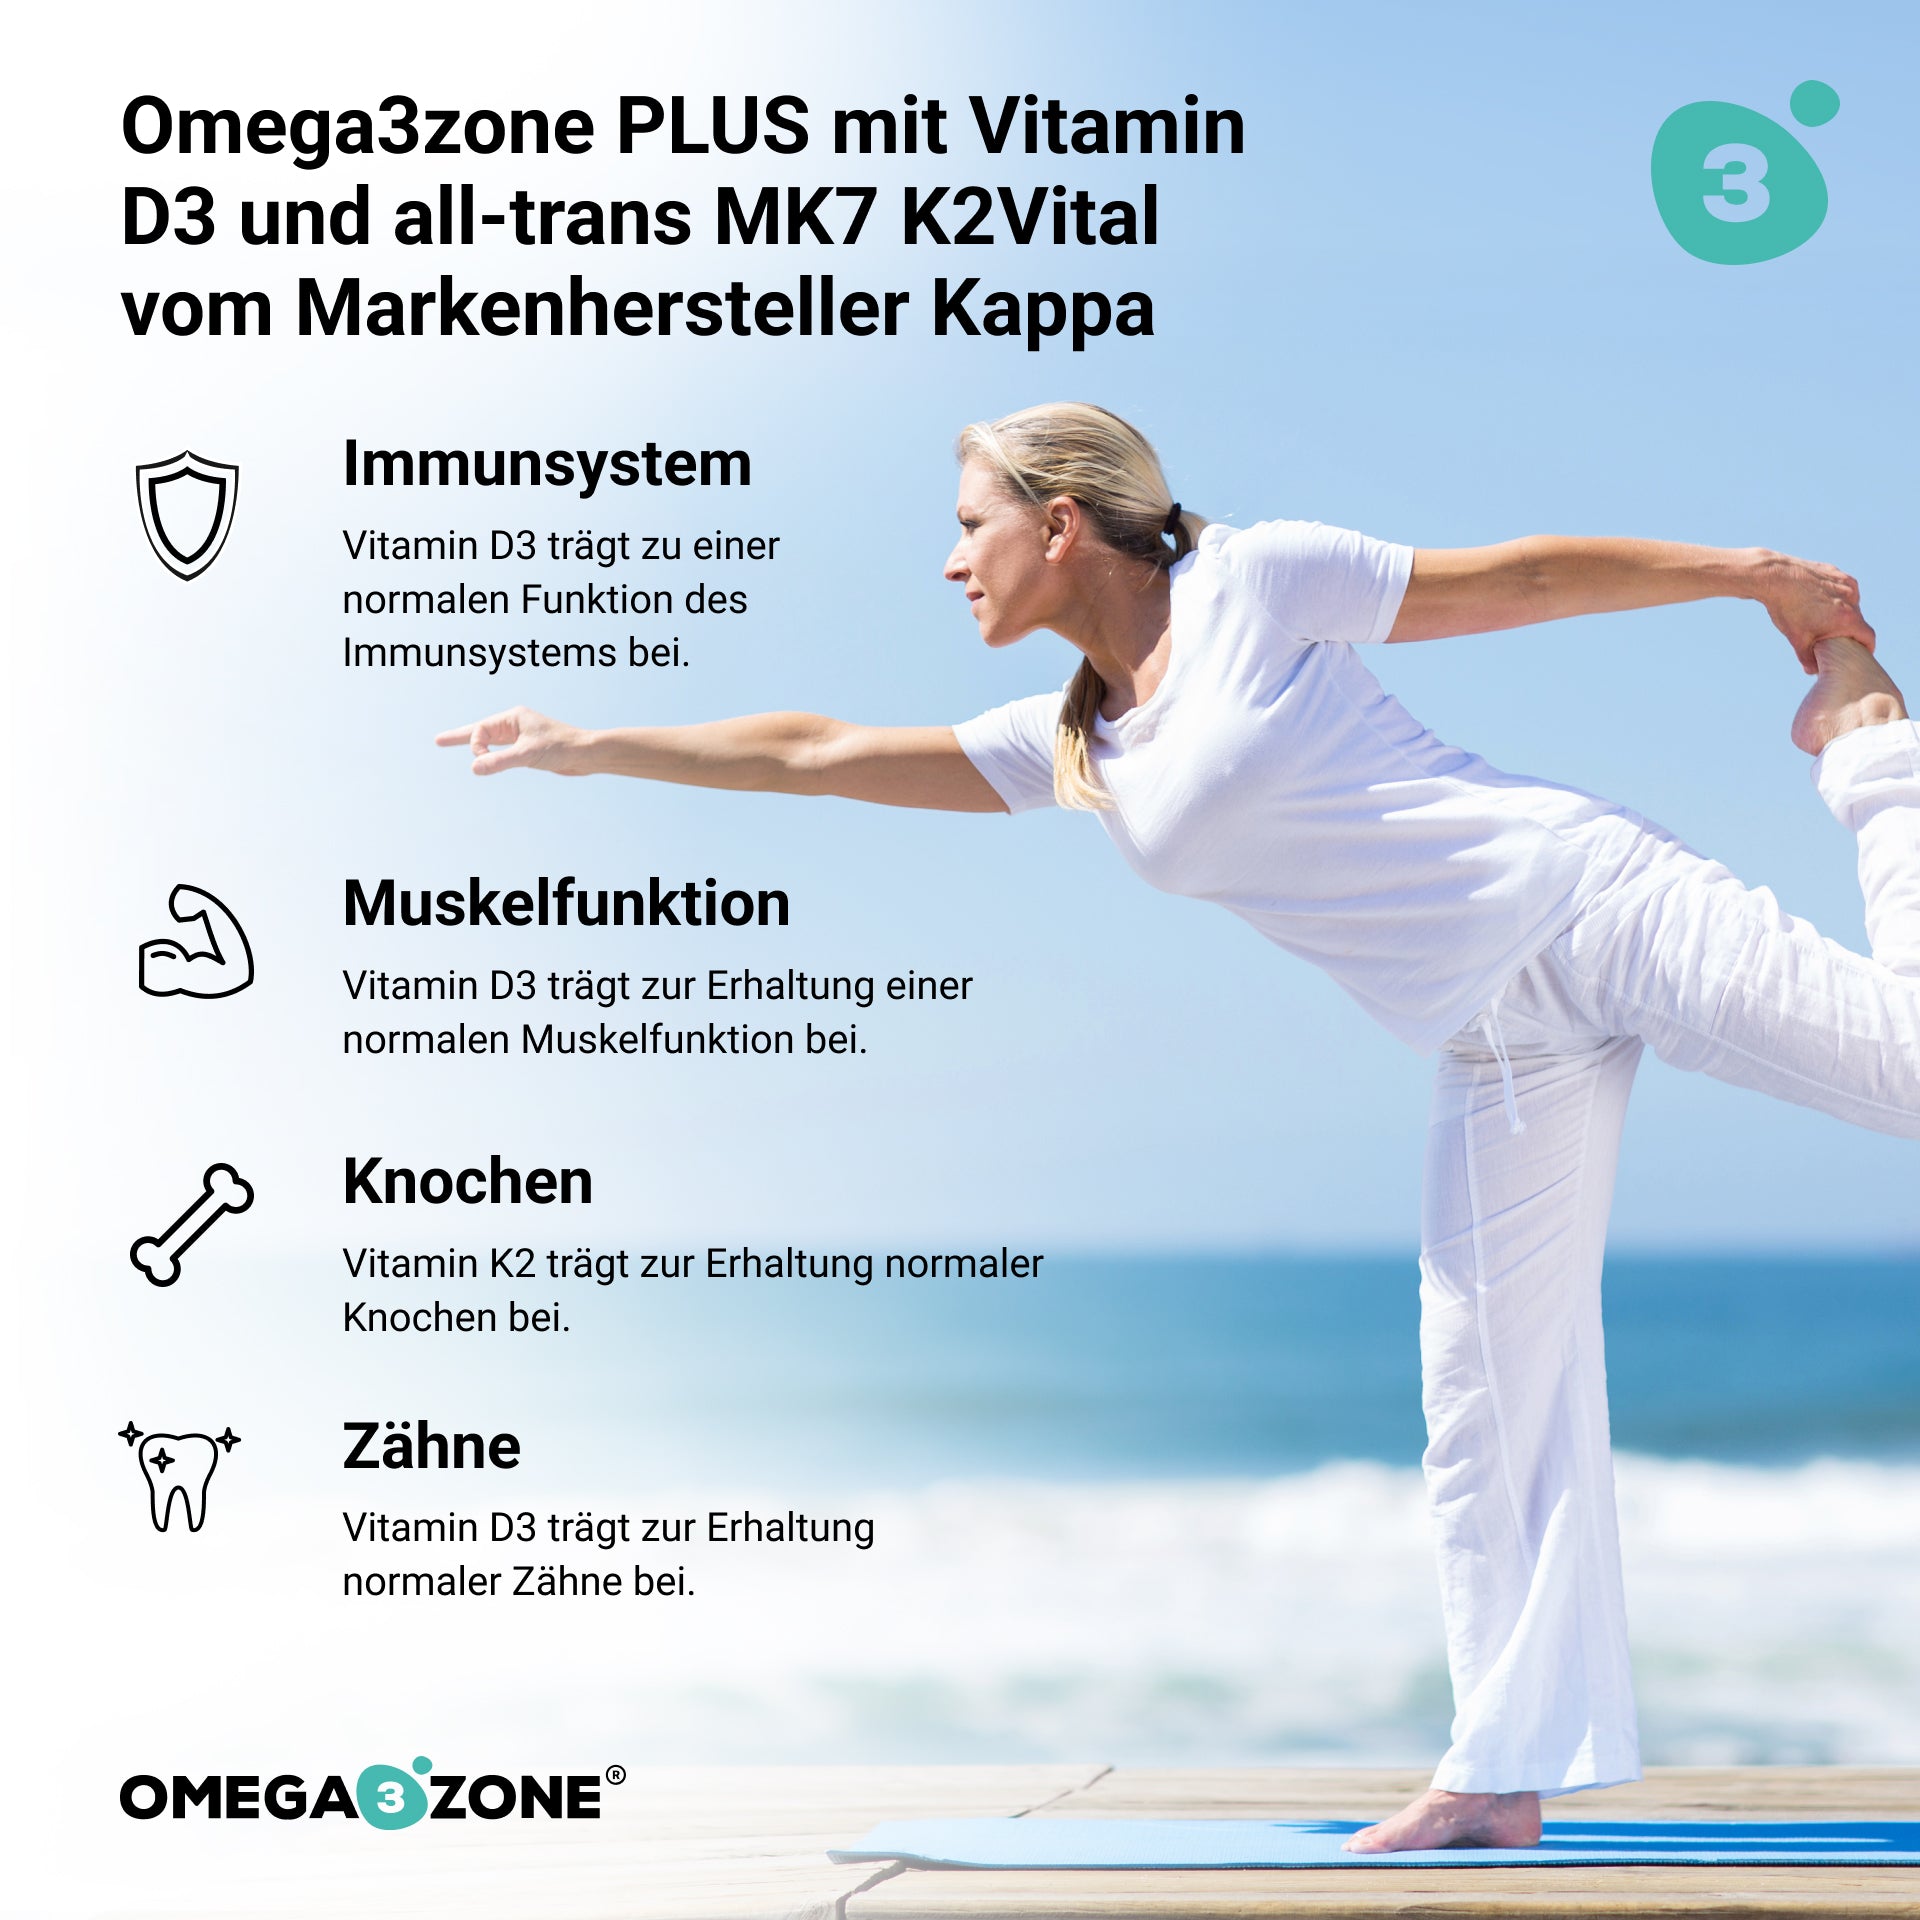 omega3zone PLUS